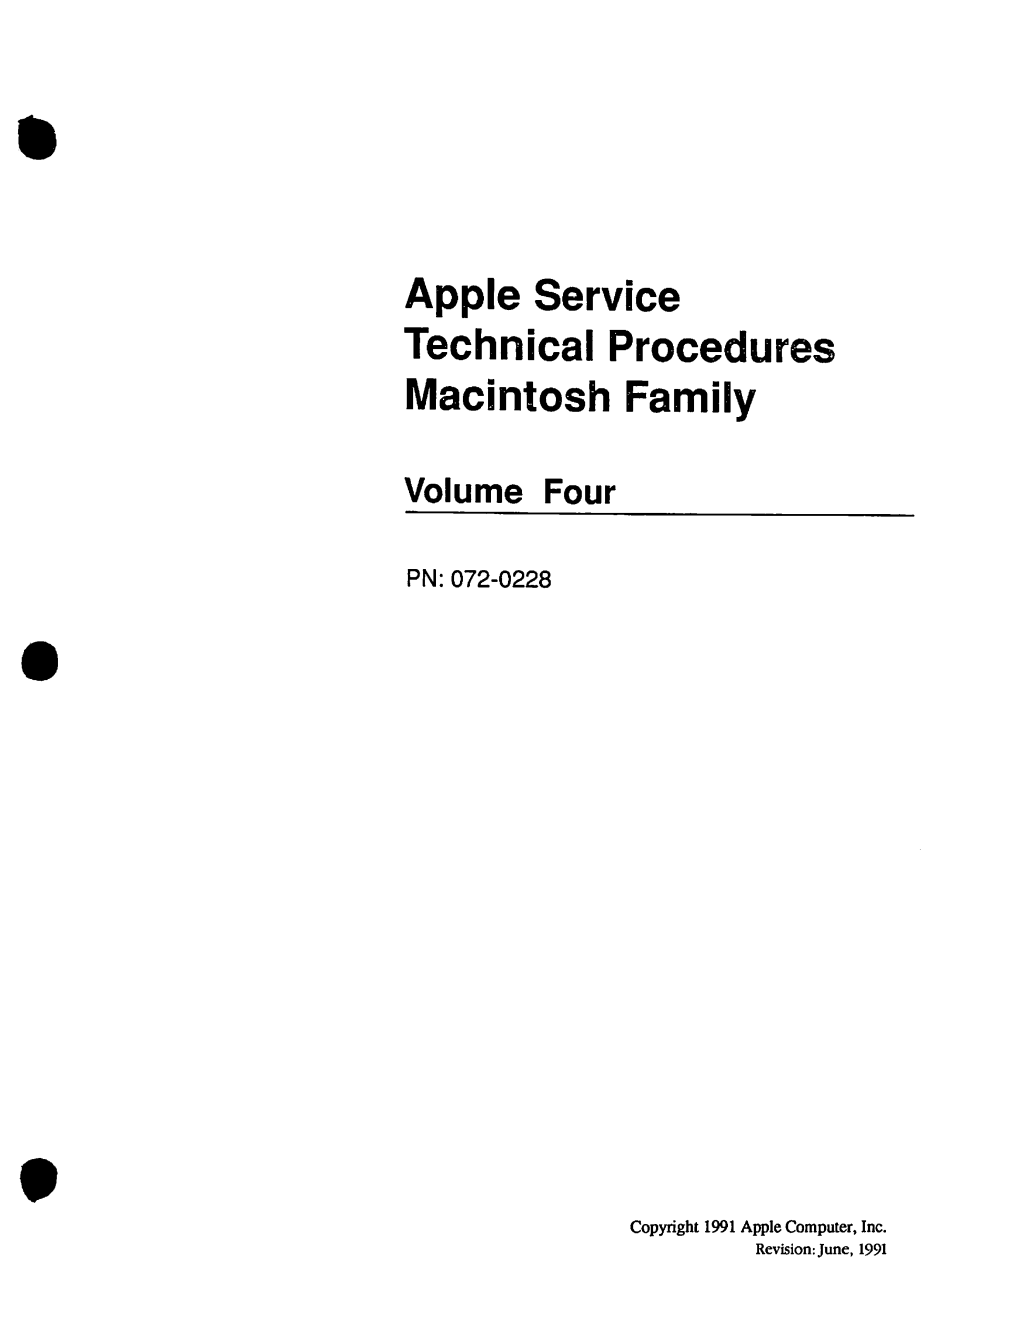 Apple Service Technical Procedores Macintosh Family